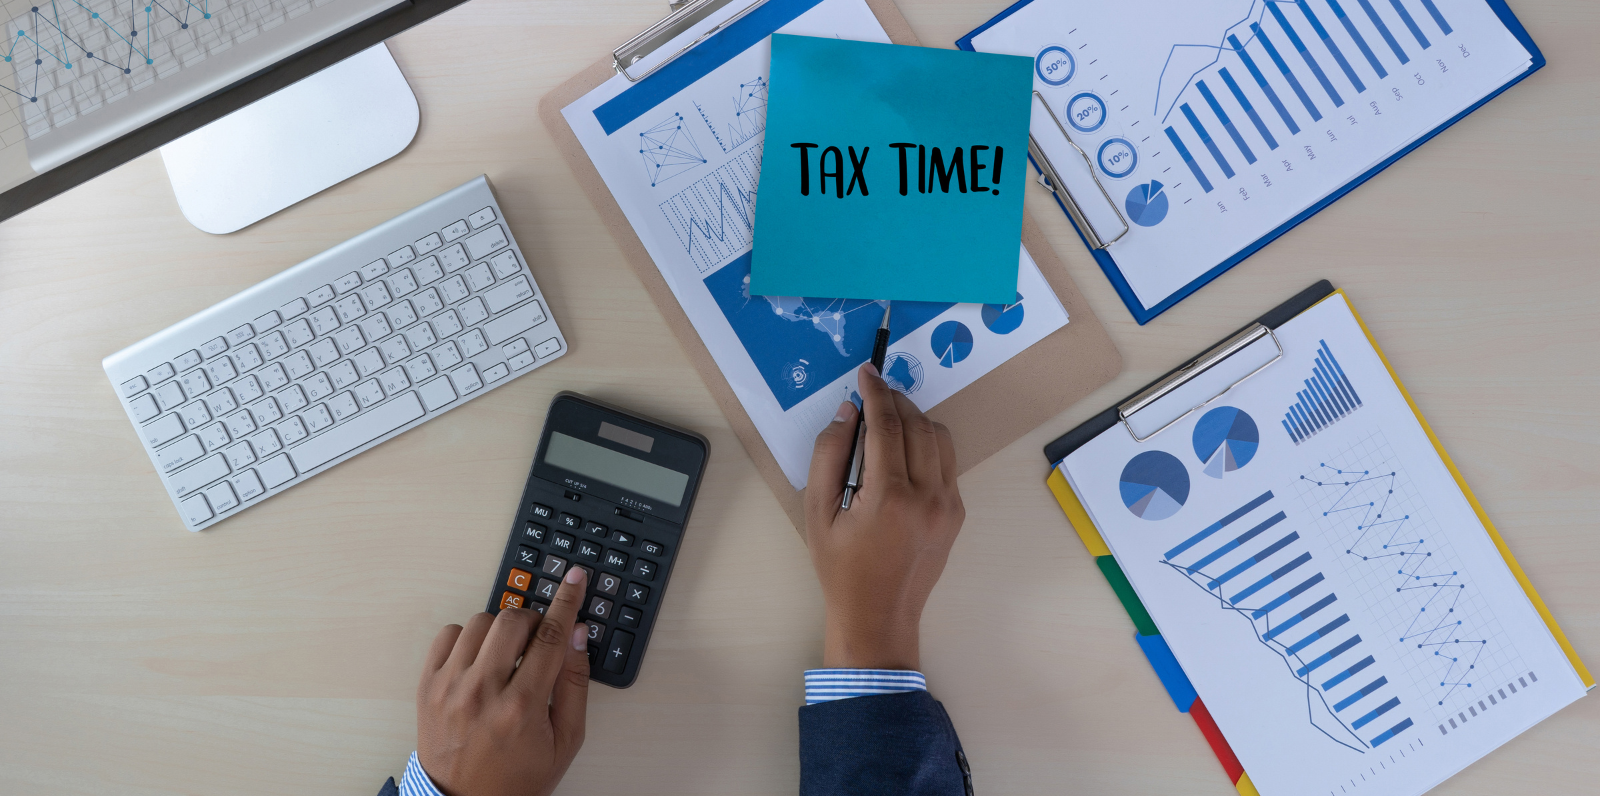 Tax Time website